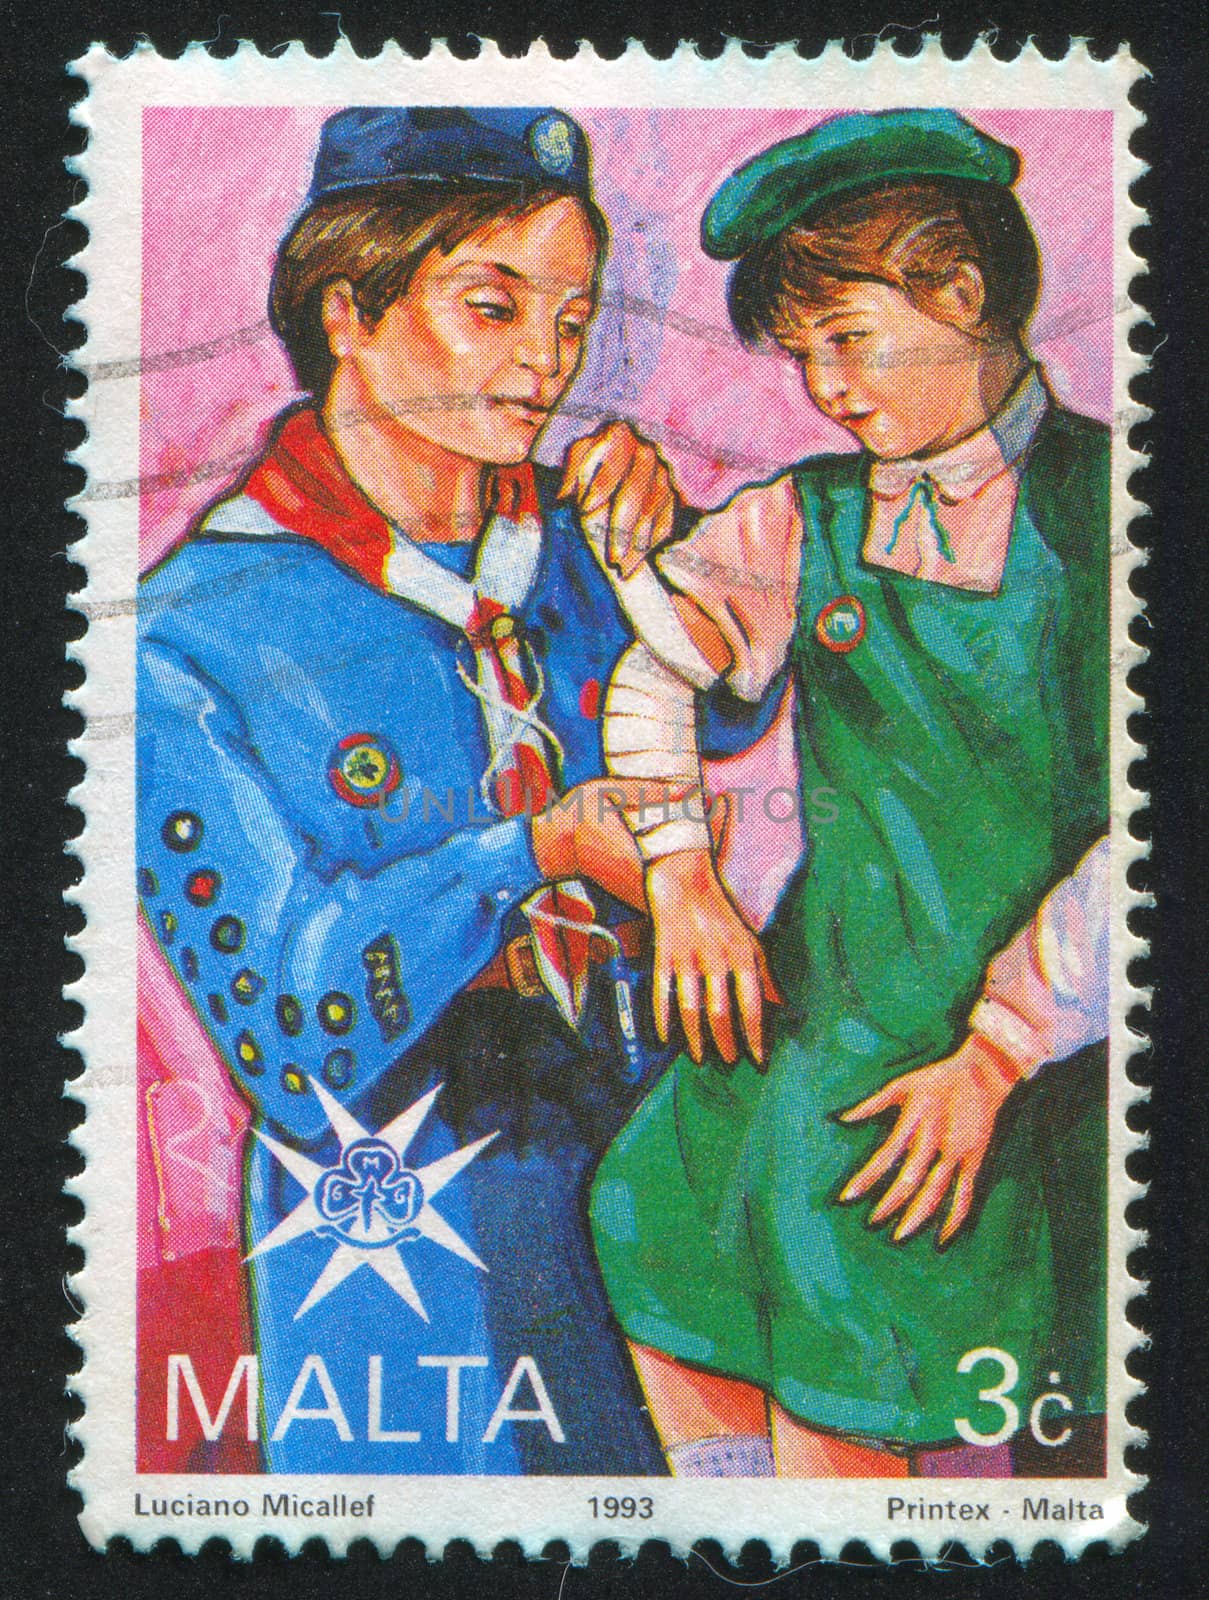 MALTA - CIRCA 1993: stamp printed by Malta, shows Leader bandaging girl, circa 1993